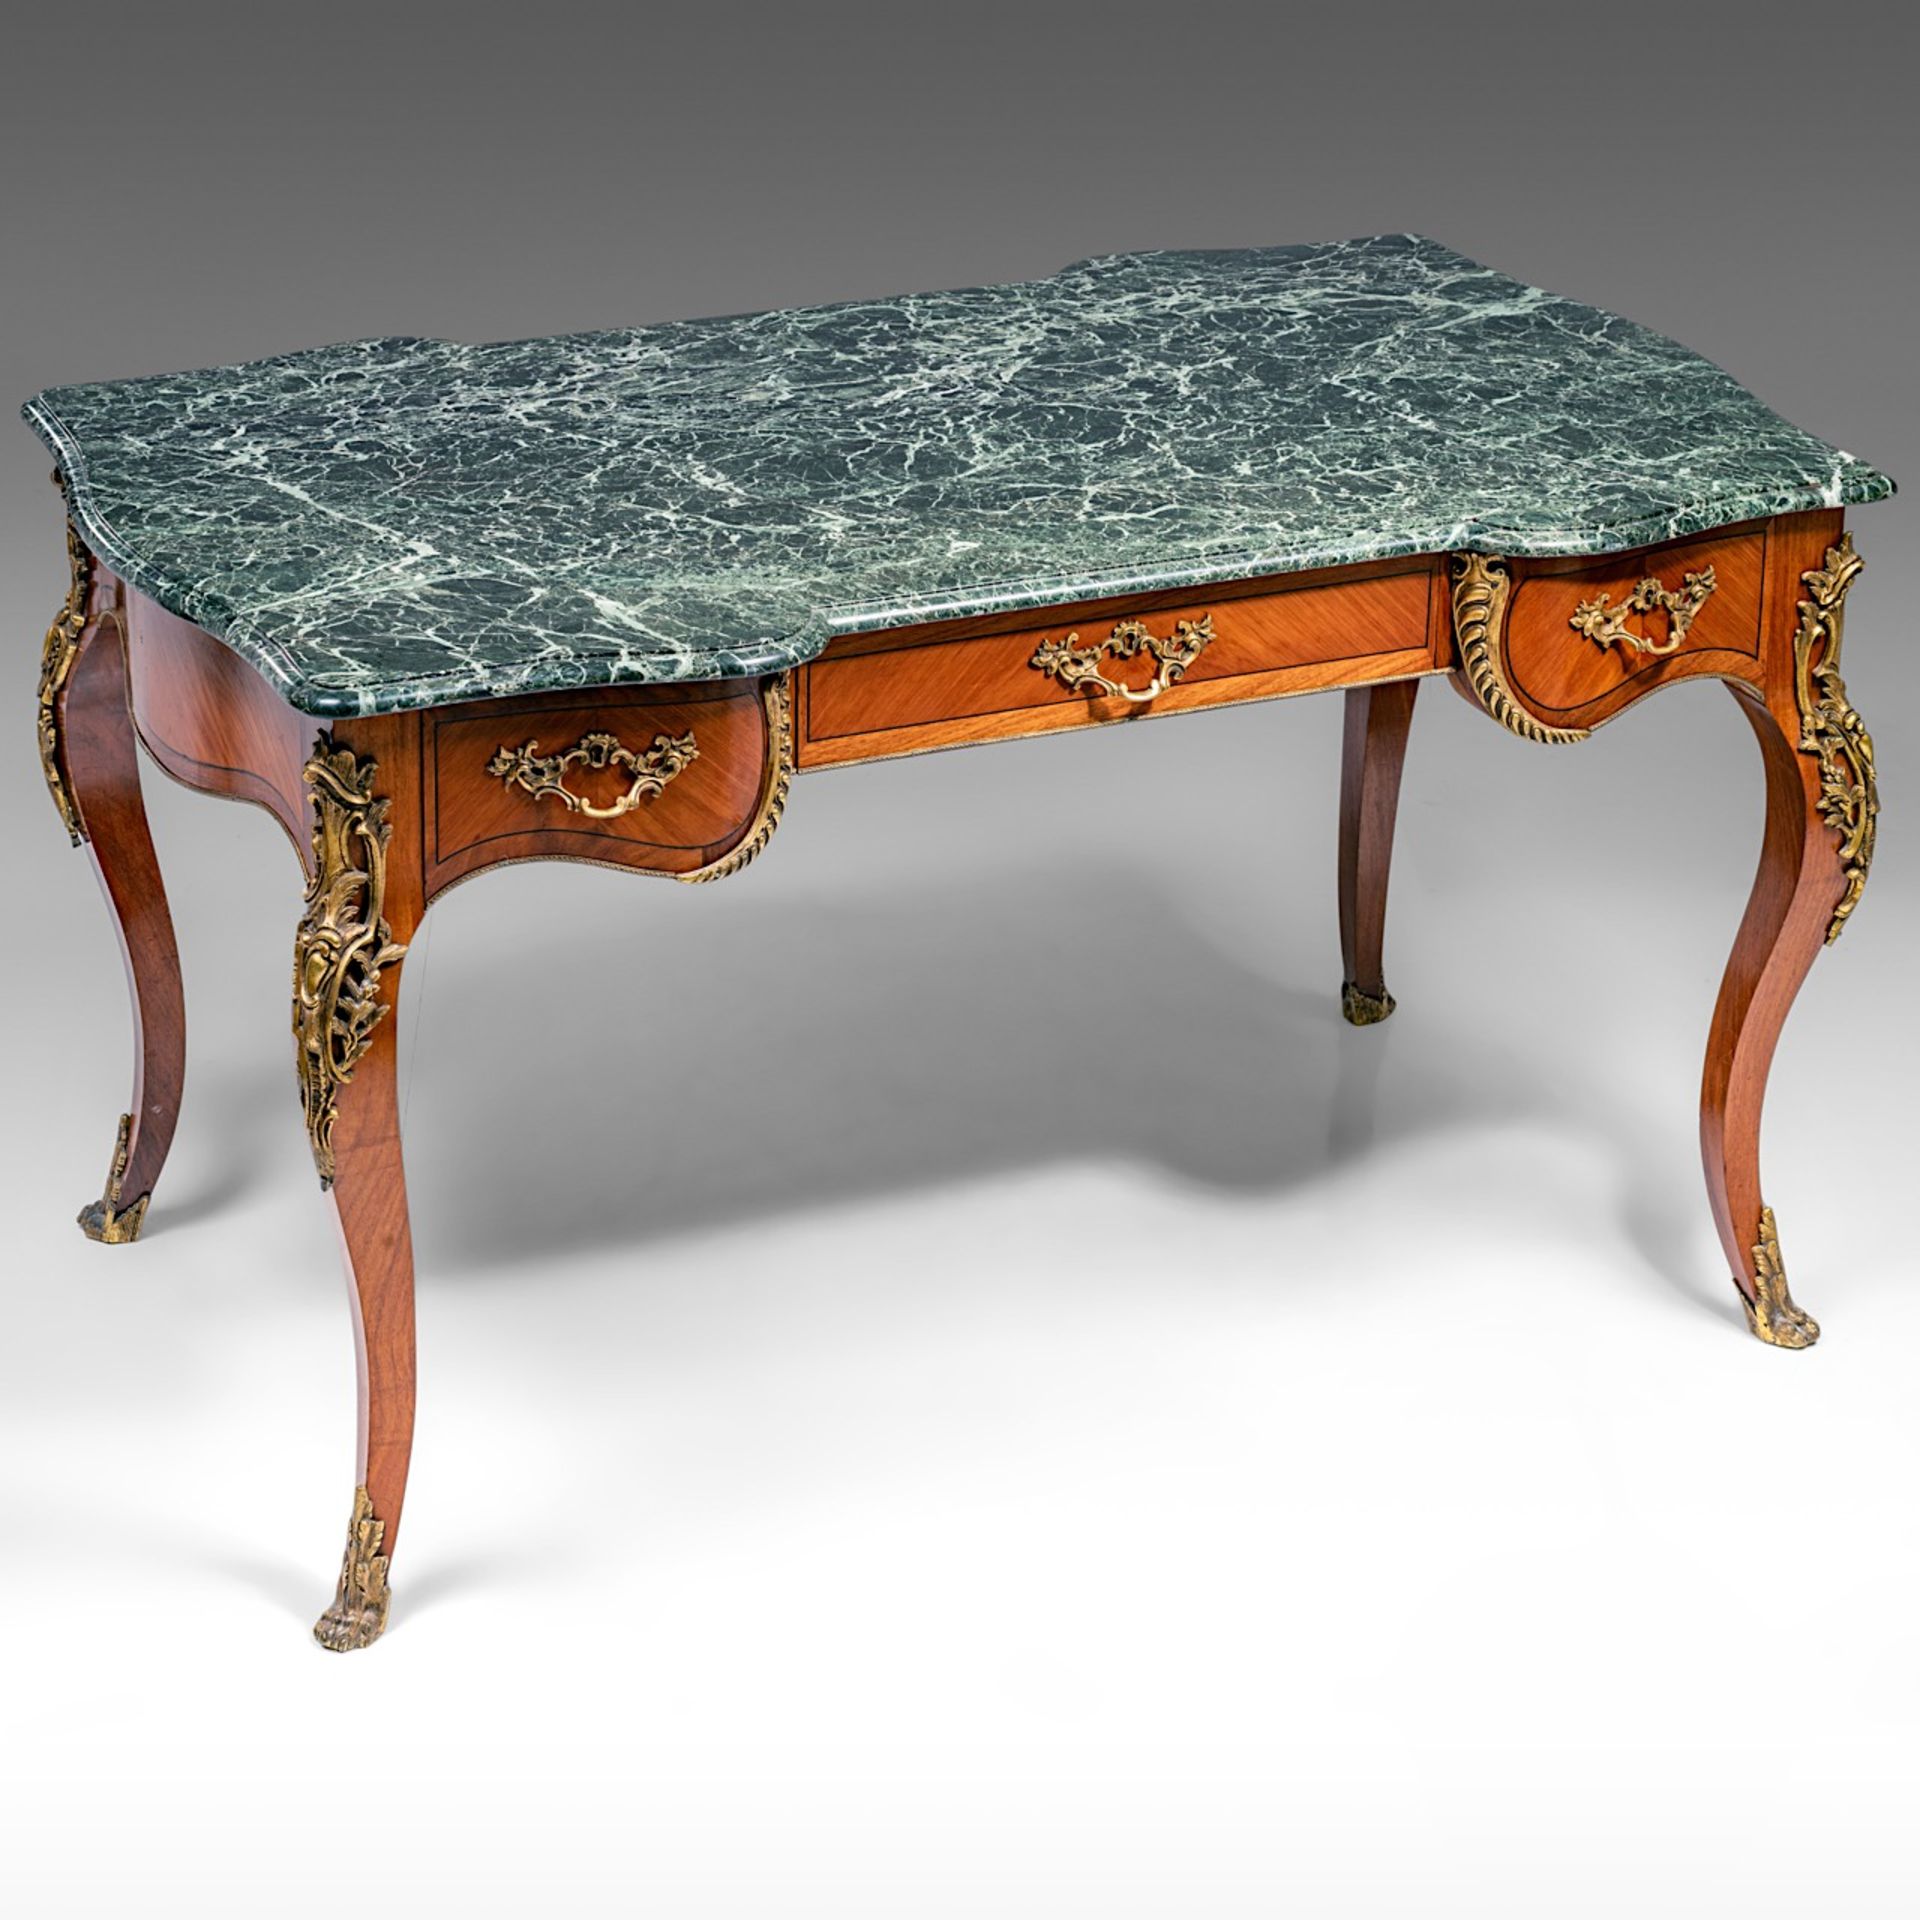 A Louis XV style 'bureau plat', with gilt bronze mounts and vert de mer marble top, H 76 - W 138 - D - Image 2 of 8